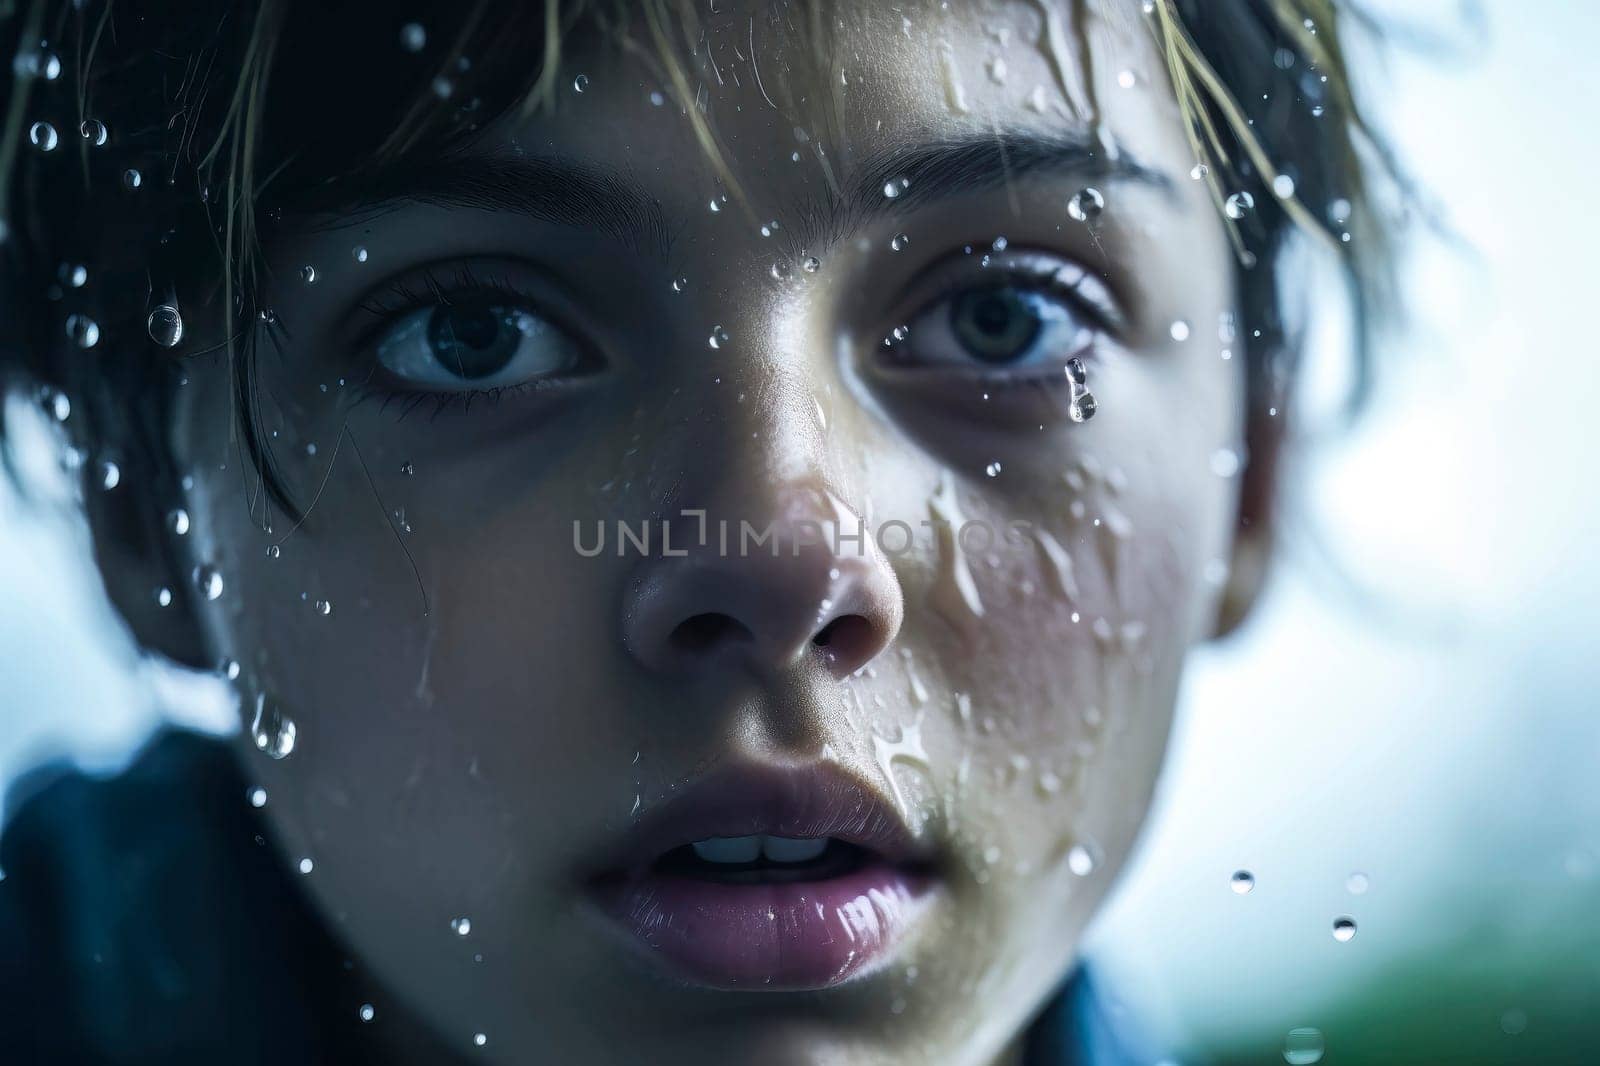 Emotive photo capturing a melancholic girl soaked in rain, reflecting her sorrow.